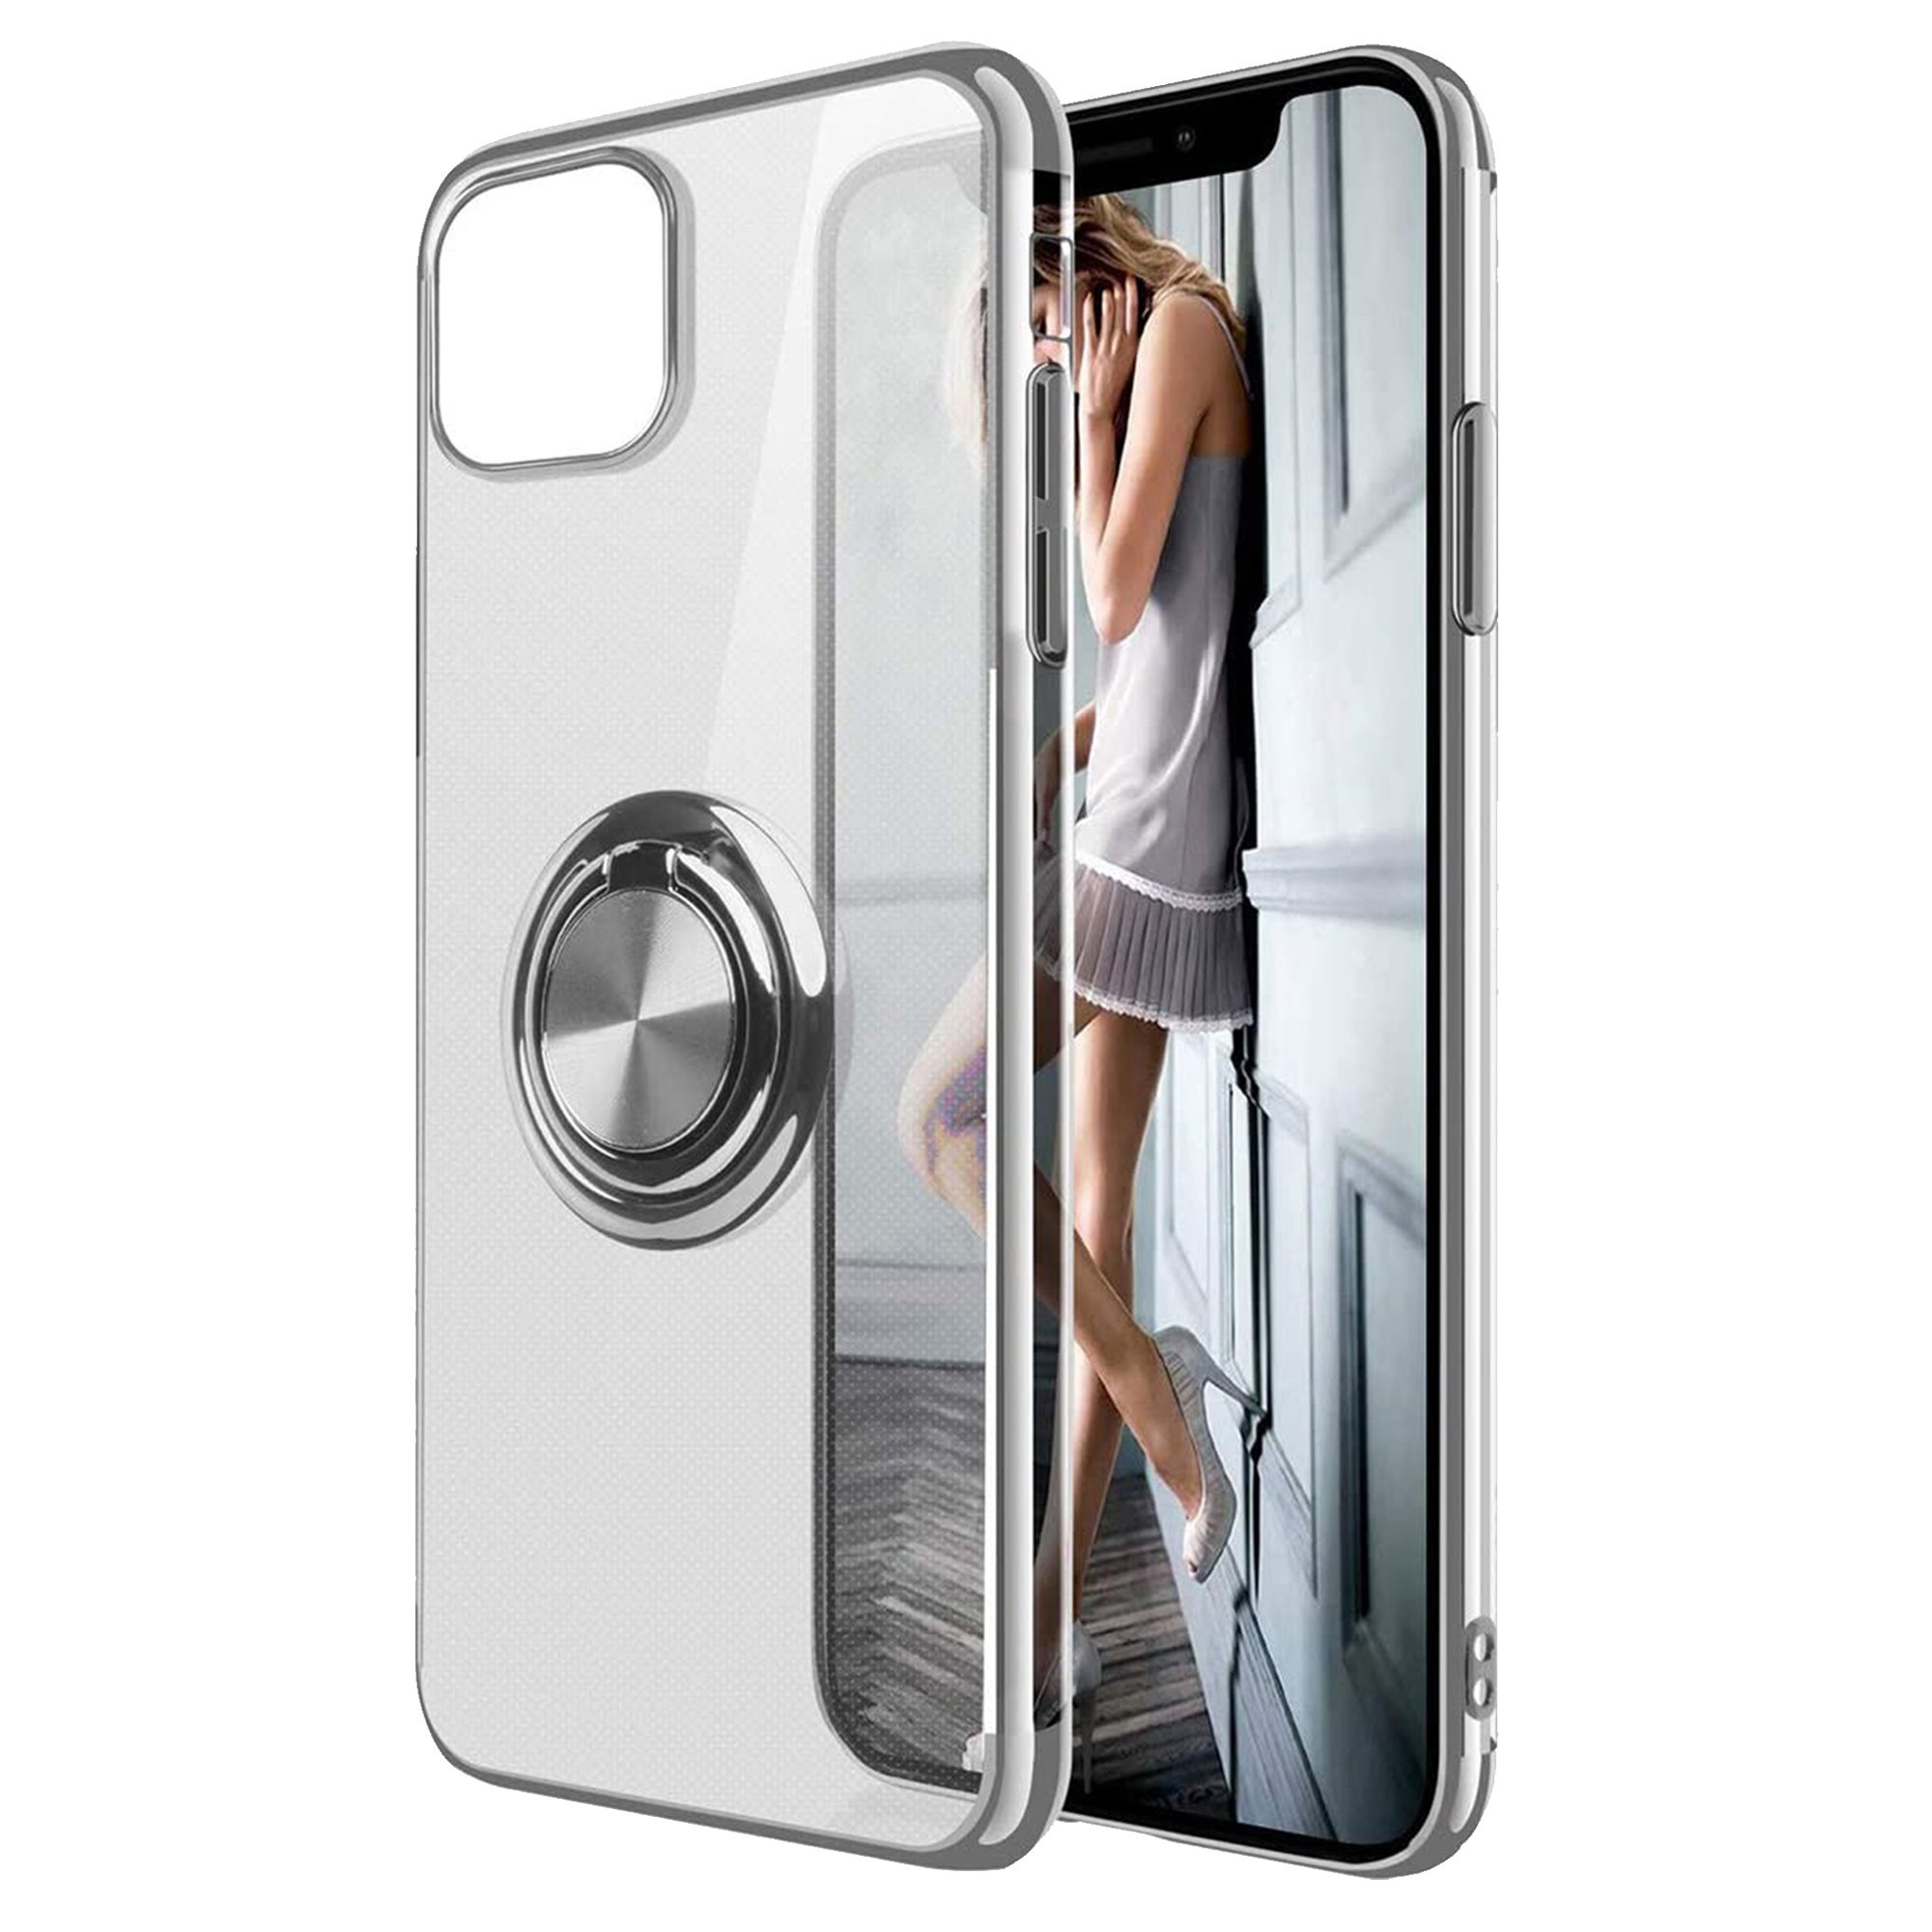 Husa PadForce Crystal-Ring transparenta din silicon cu inel rotativ metalic – iPhone 12, Argintiu